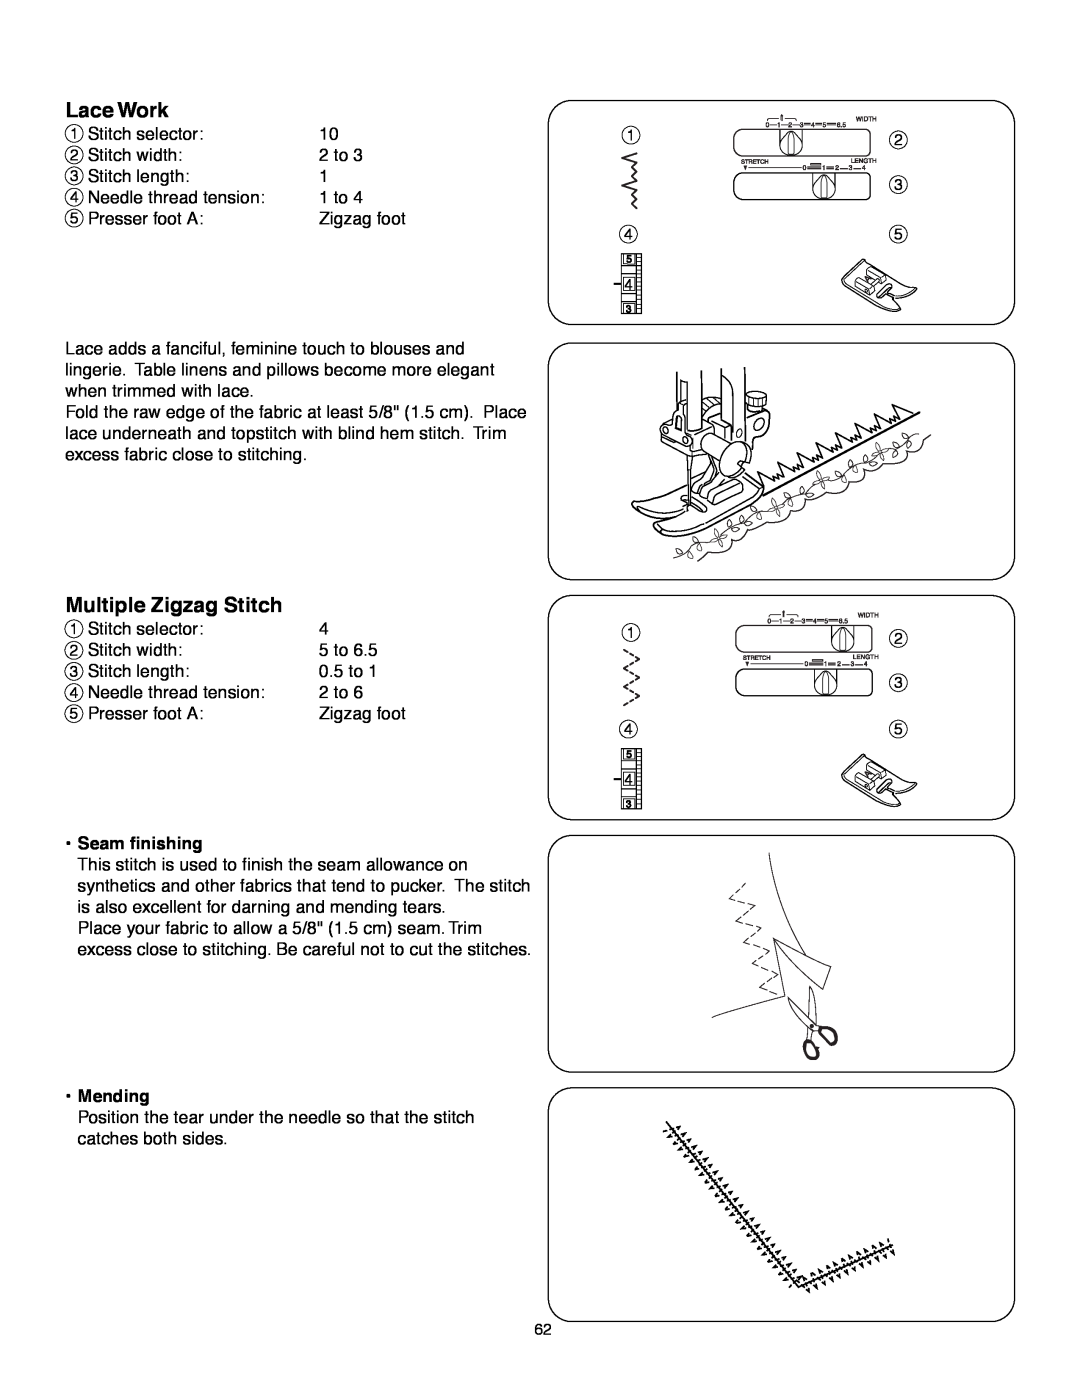 Janome MS-5027 instruction manual Lace Work, Multiple Zigzag Stitch, Seam finishing, Mending 